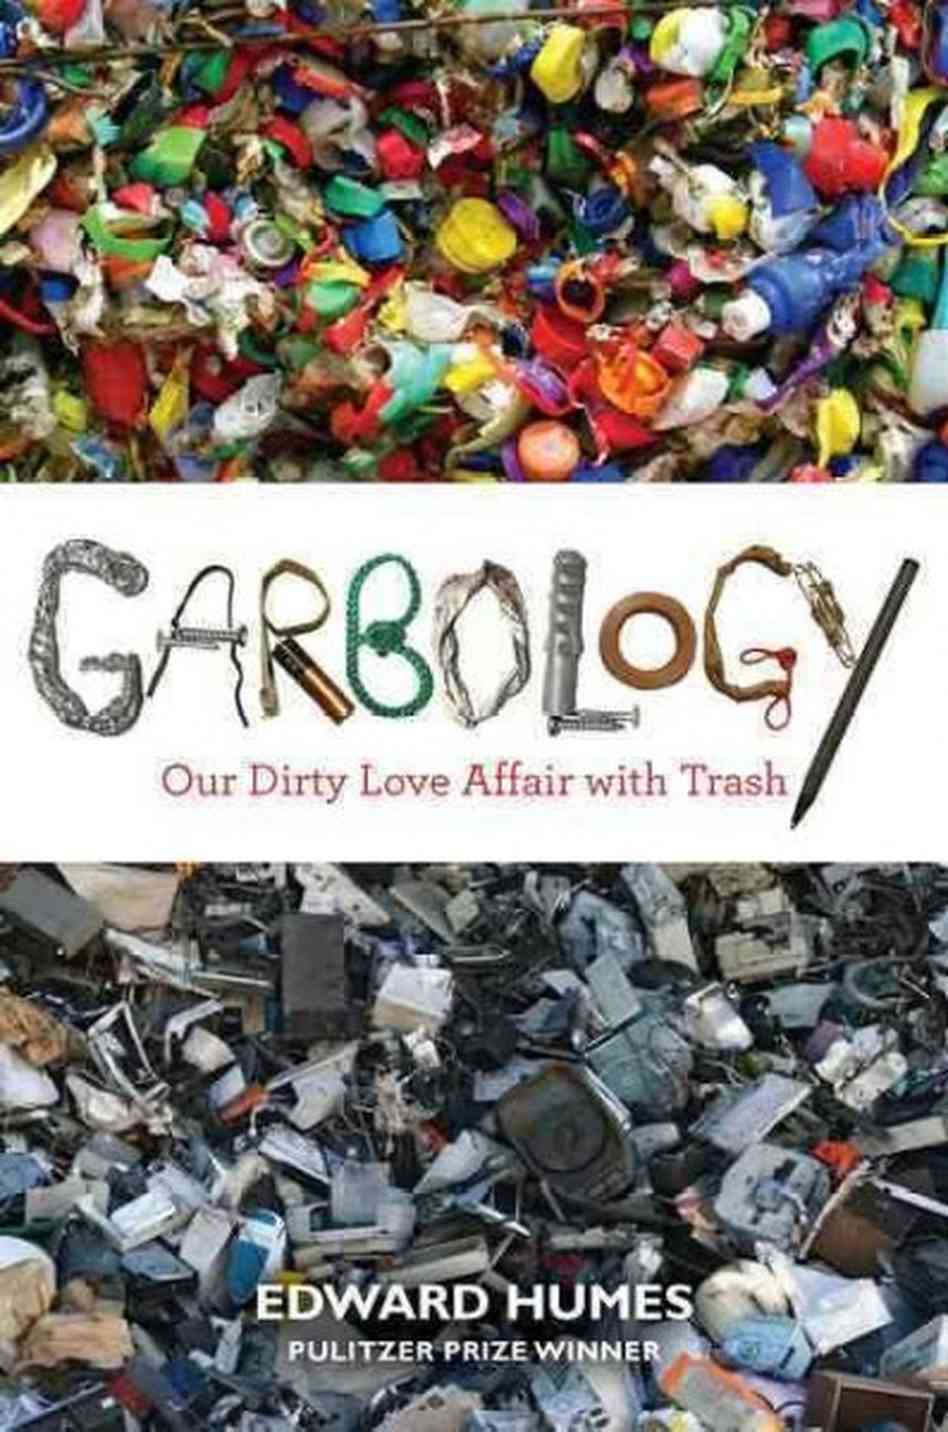 Garbology book cover